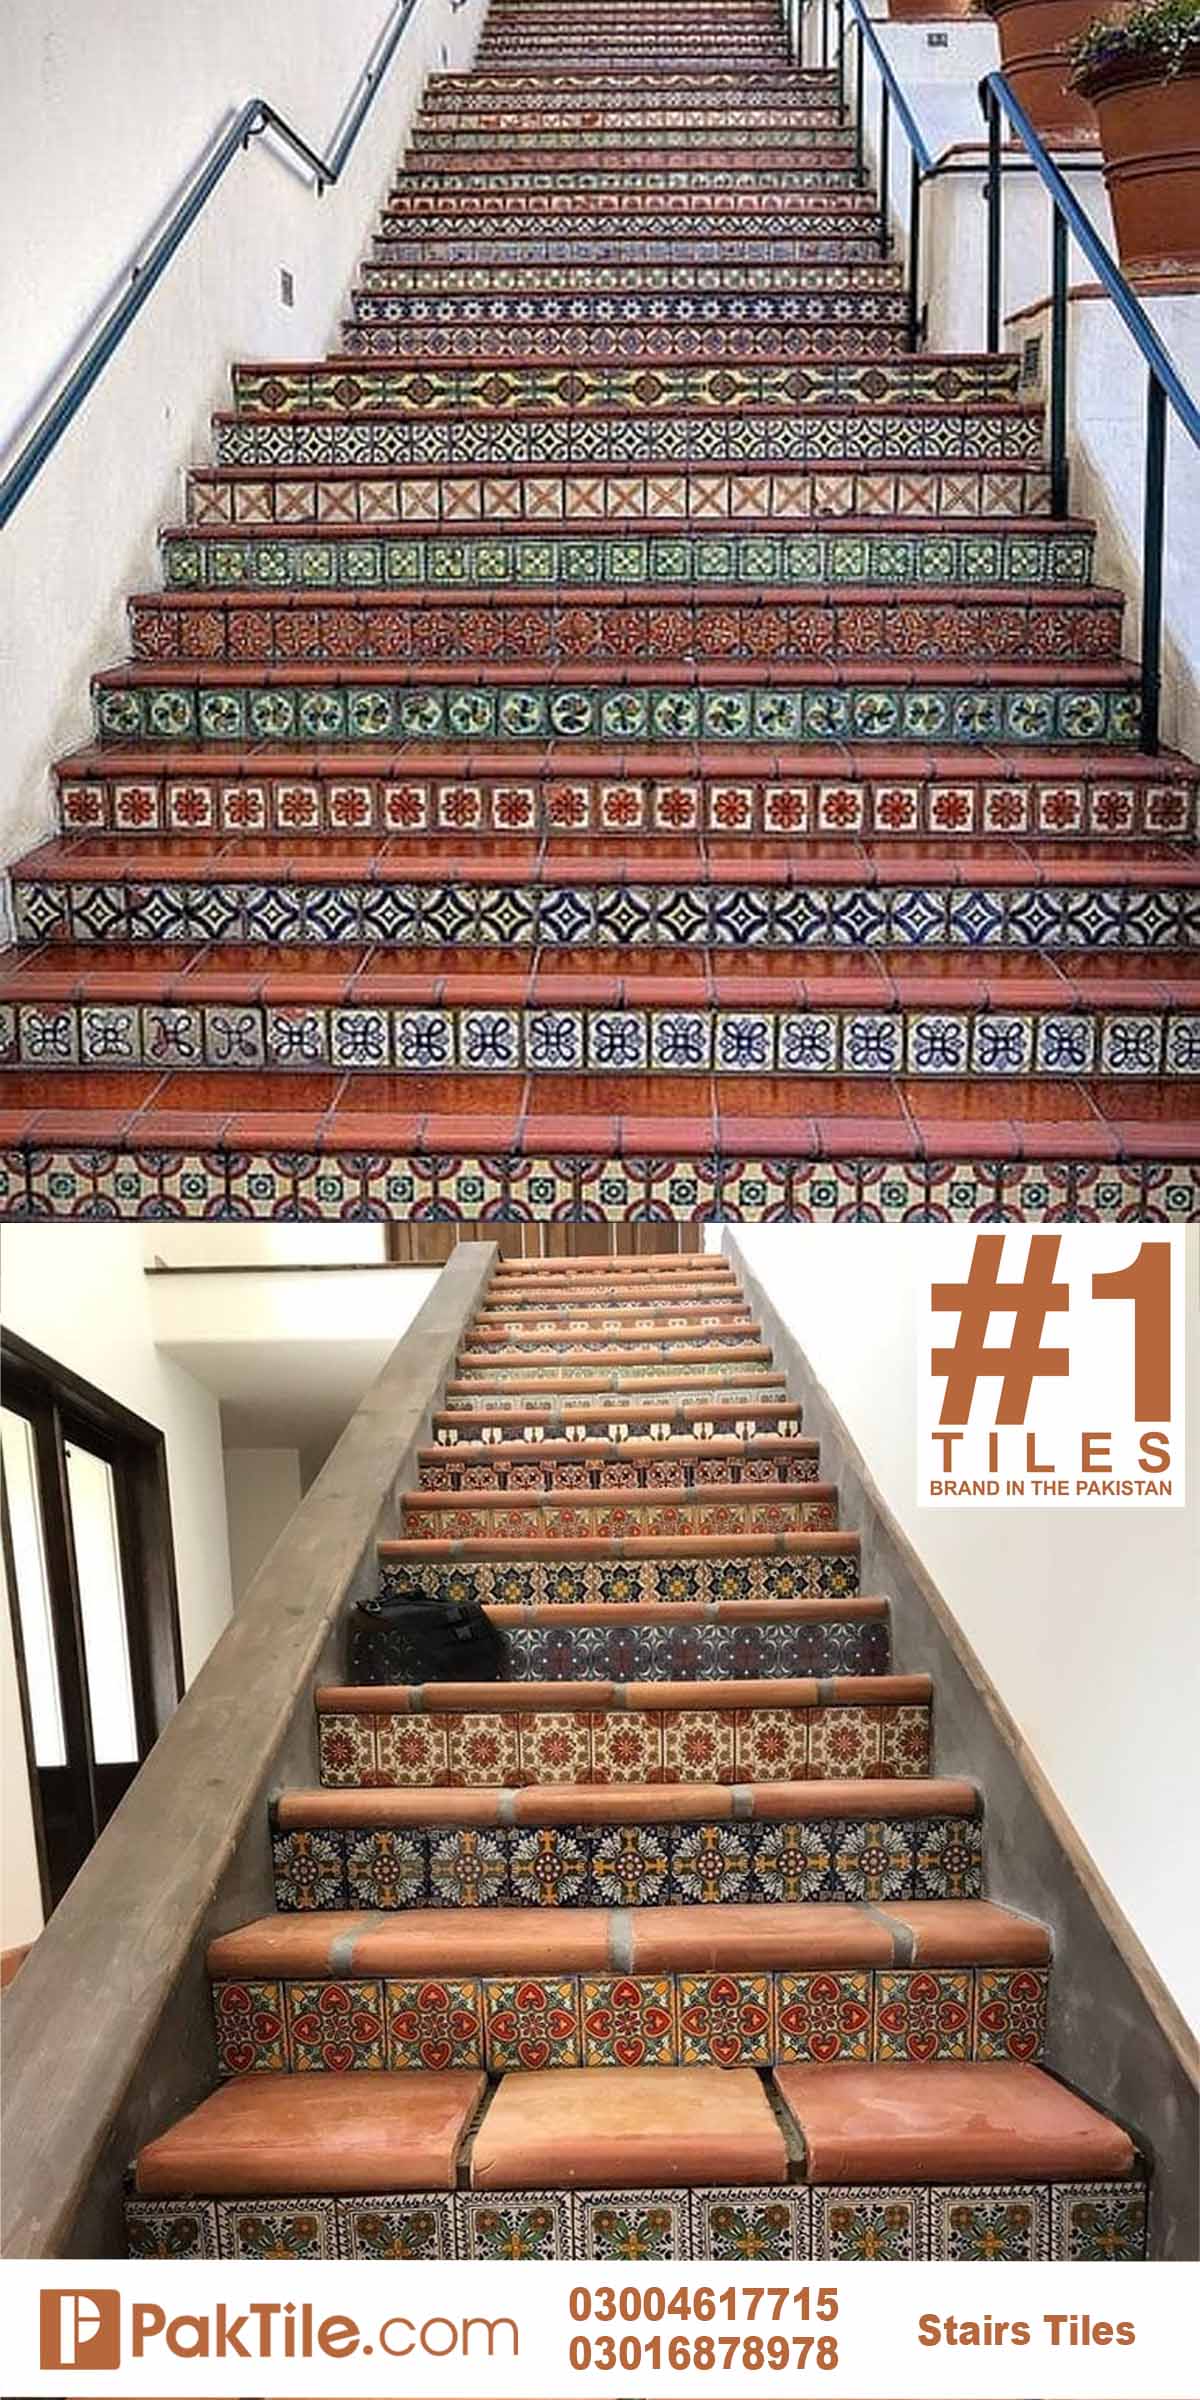 Mosaic Stair Tiles in Pakistan